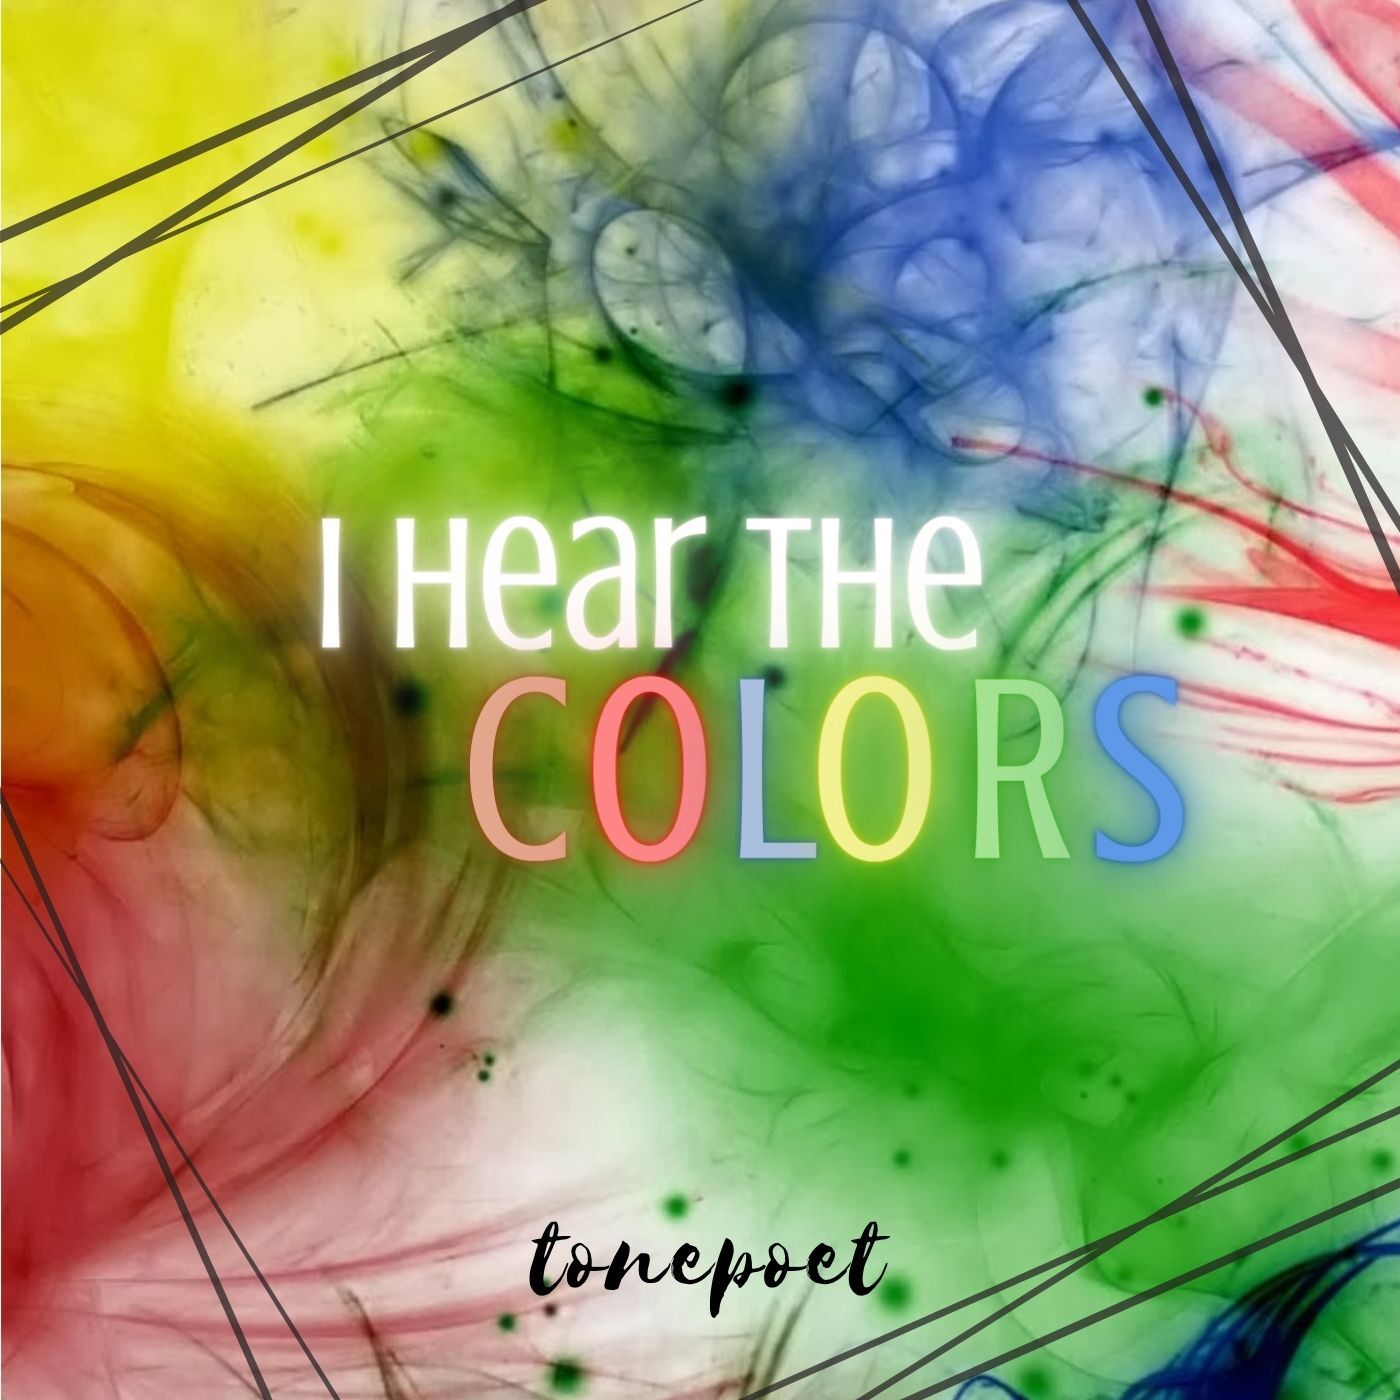 I_Hear_The_Colors_FINAL_b33o2.jpg